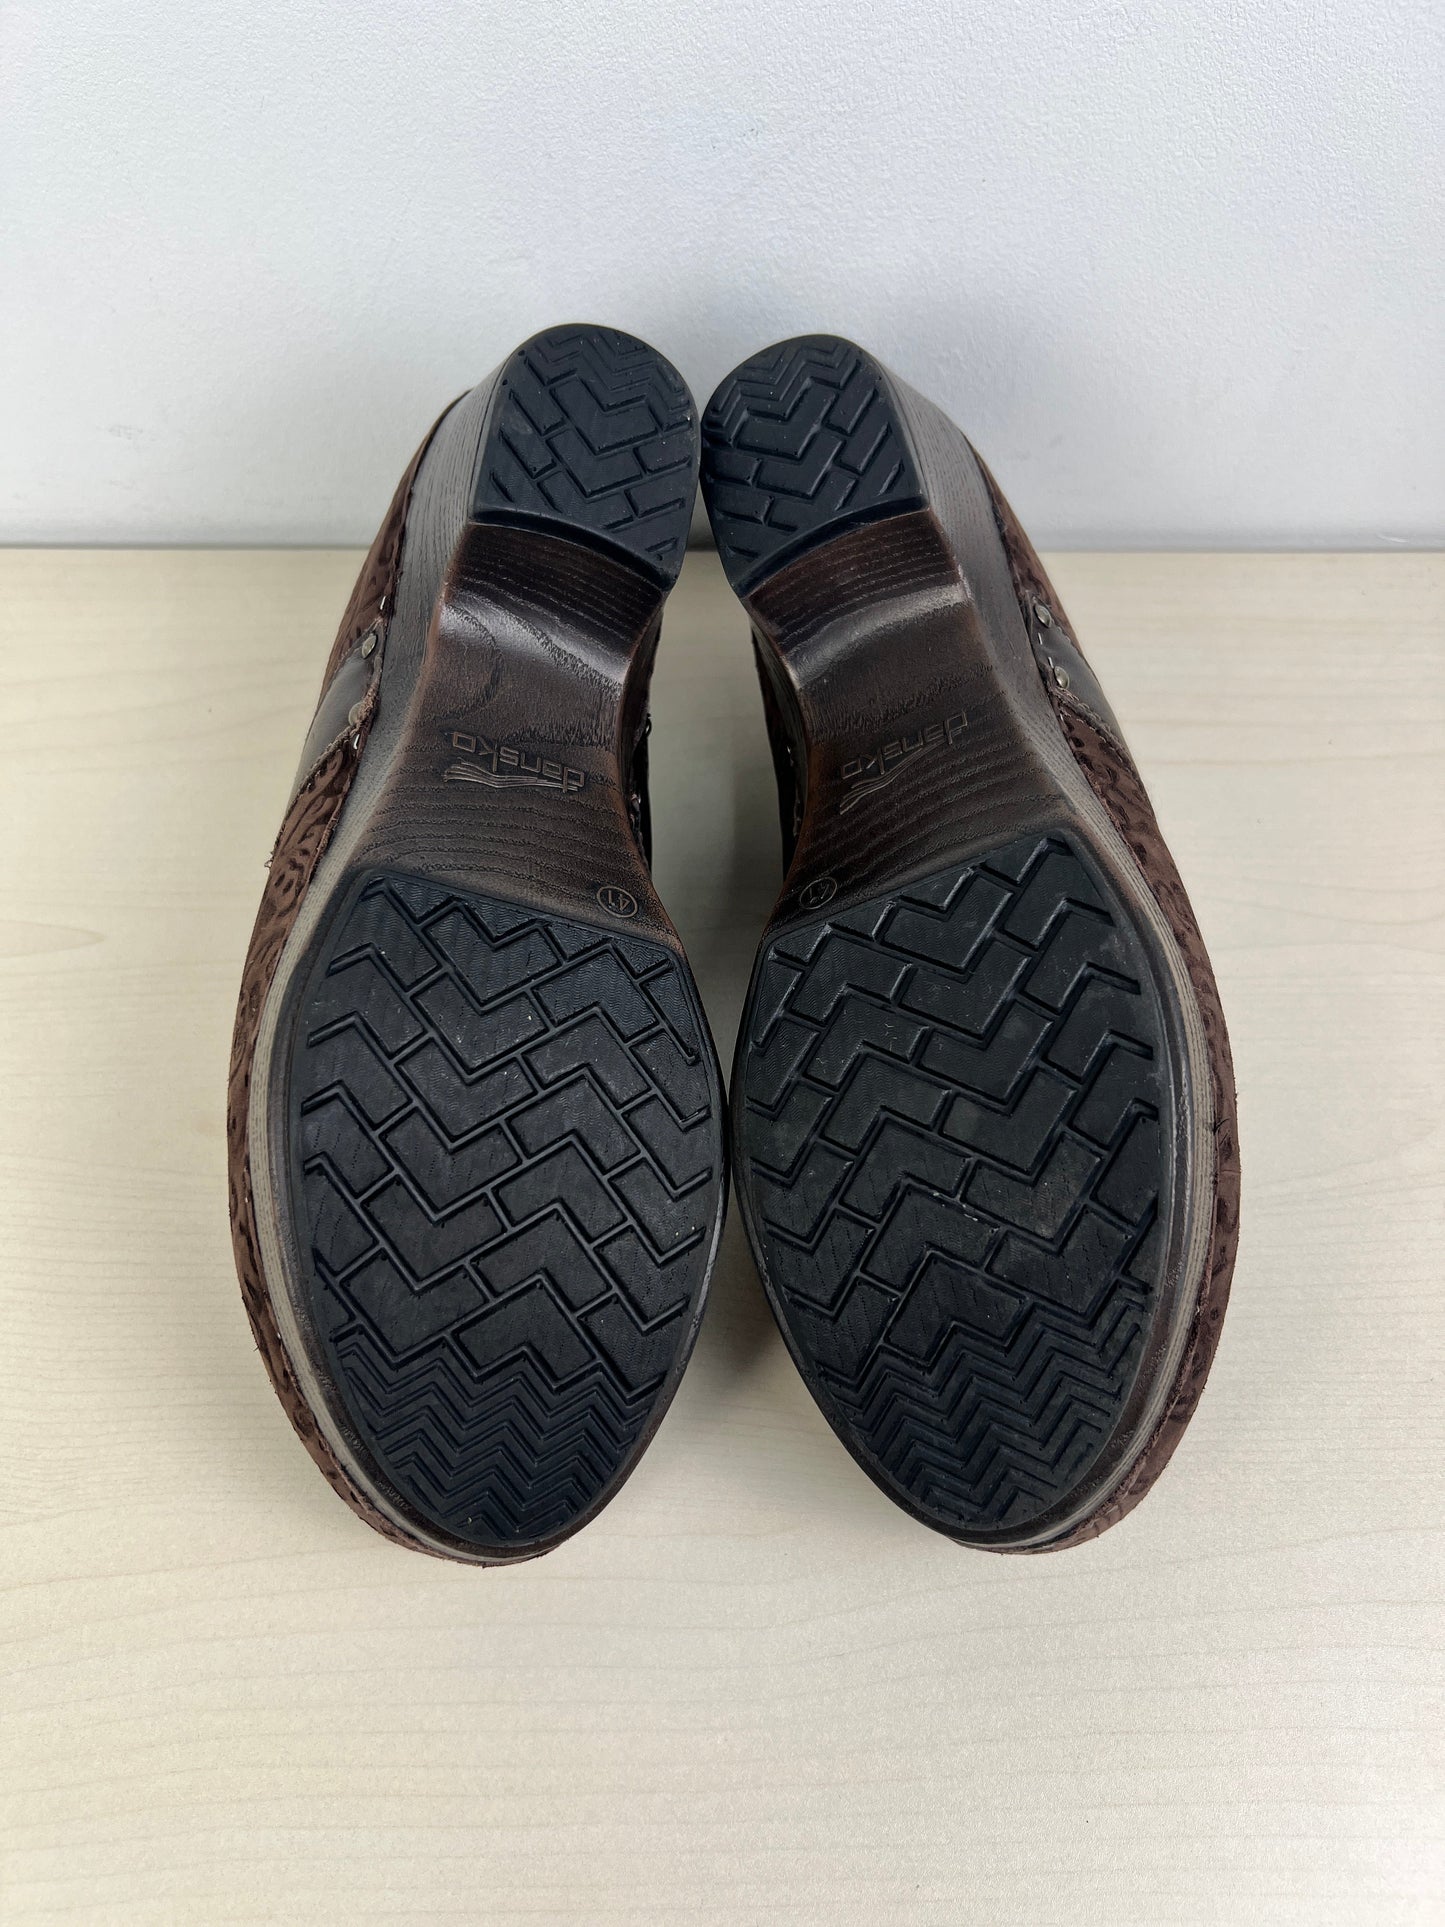 Brown Shoes Heels Block Dansko, Size 10.5